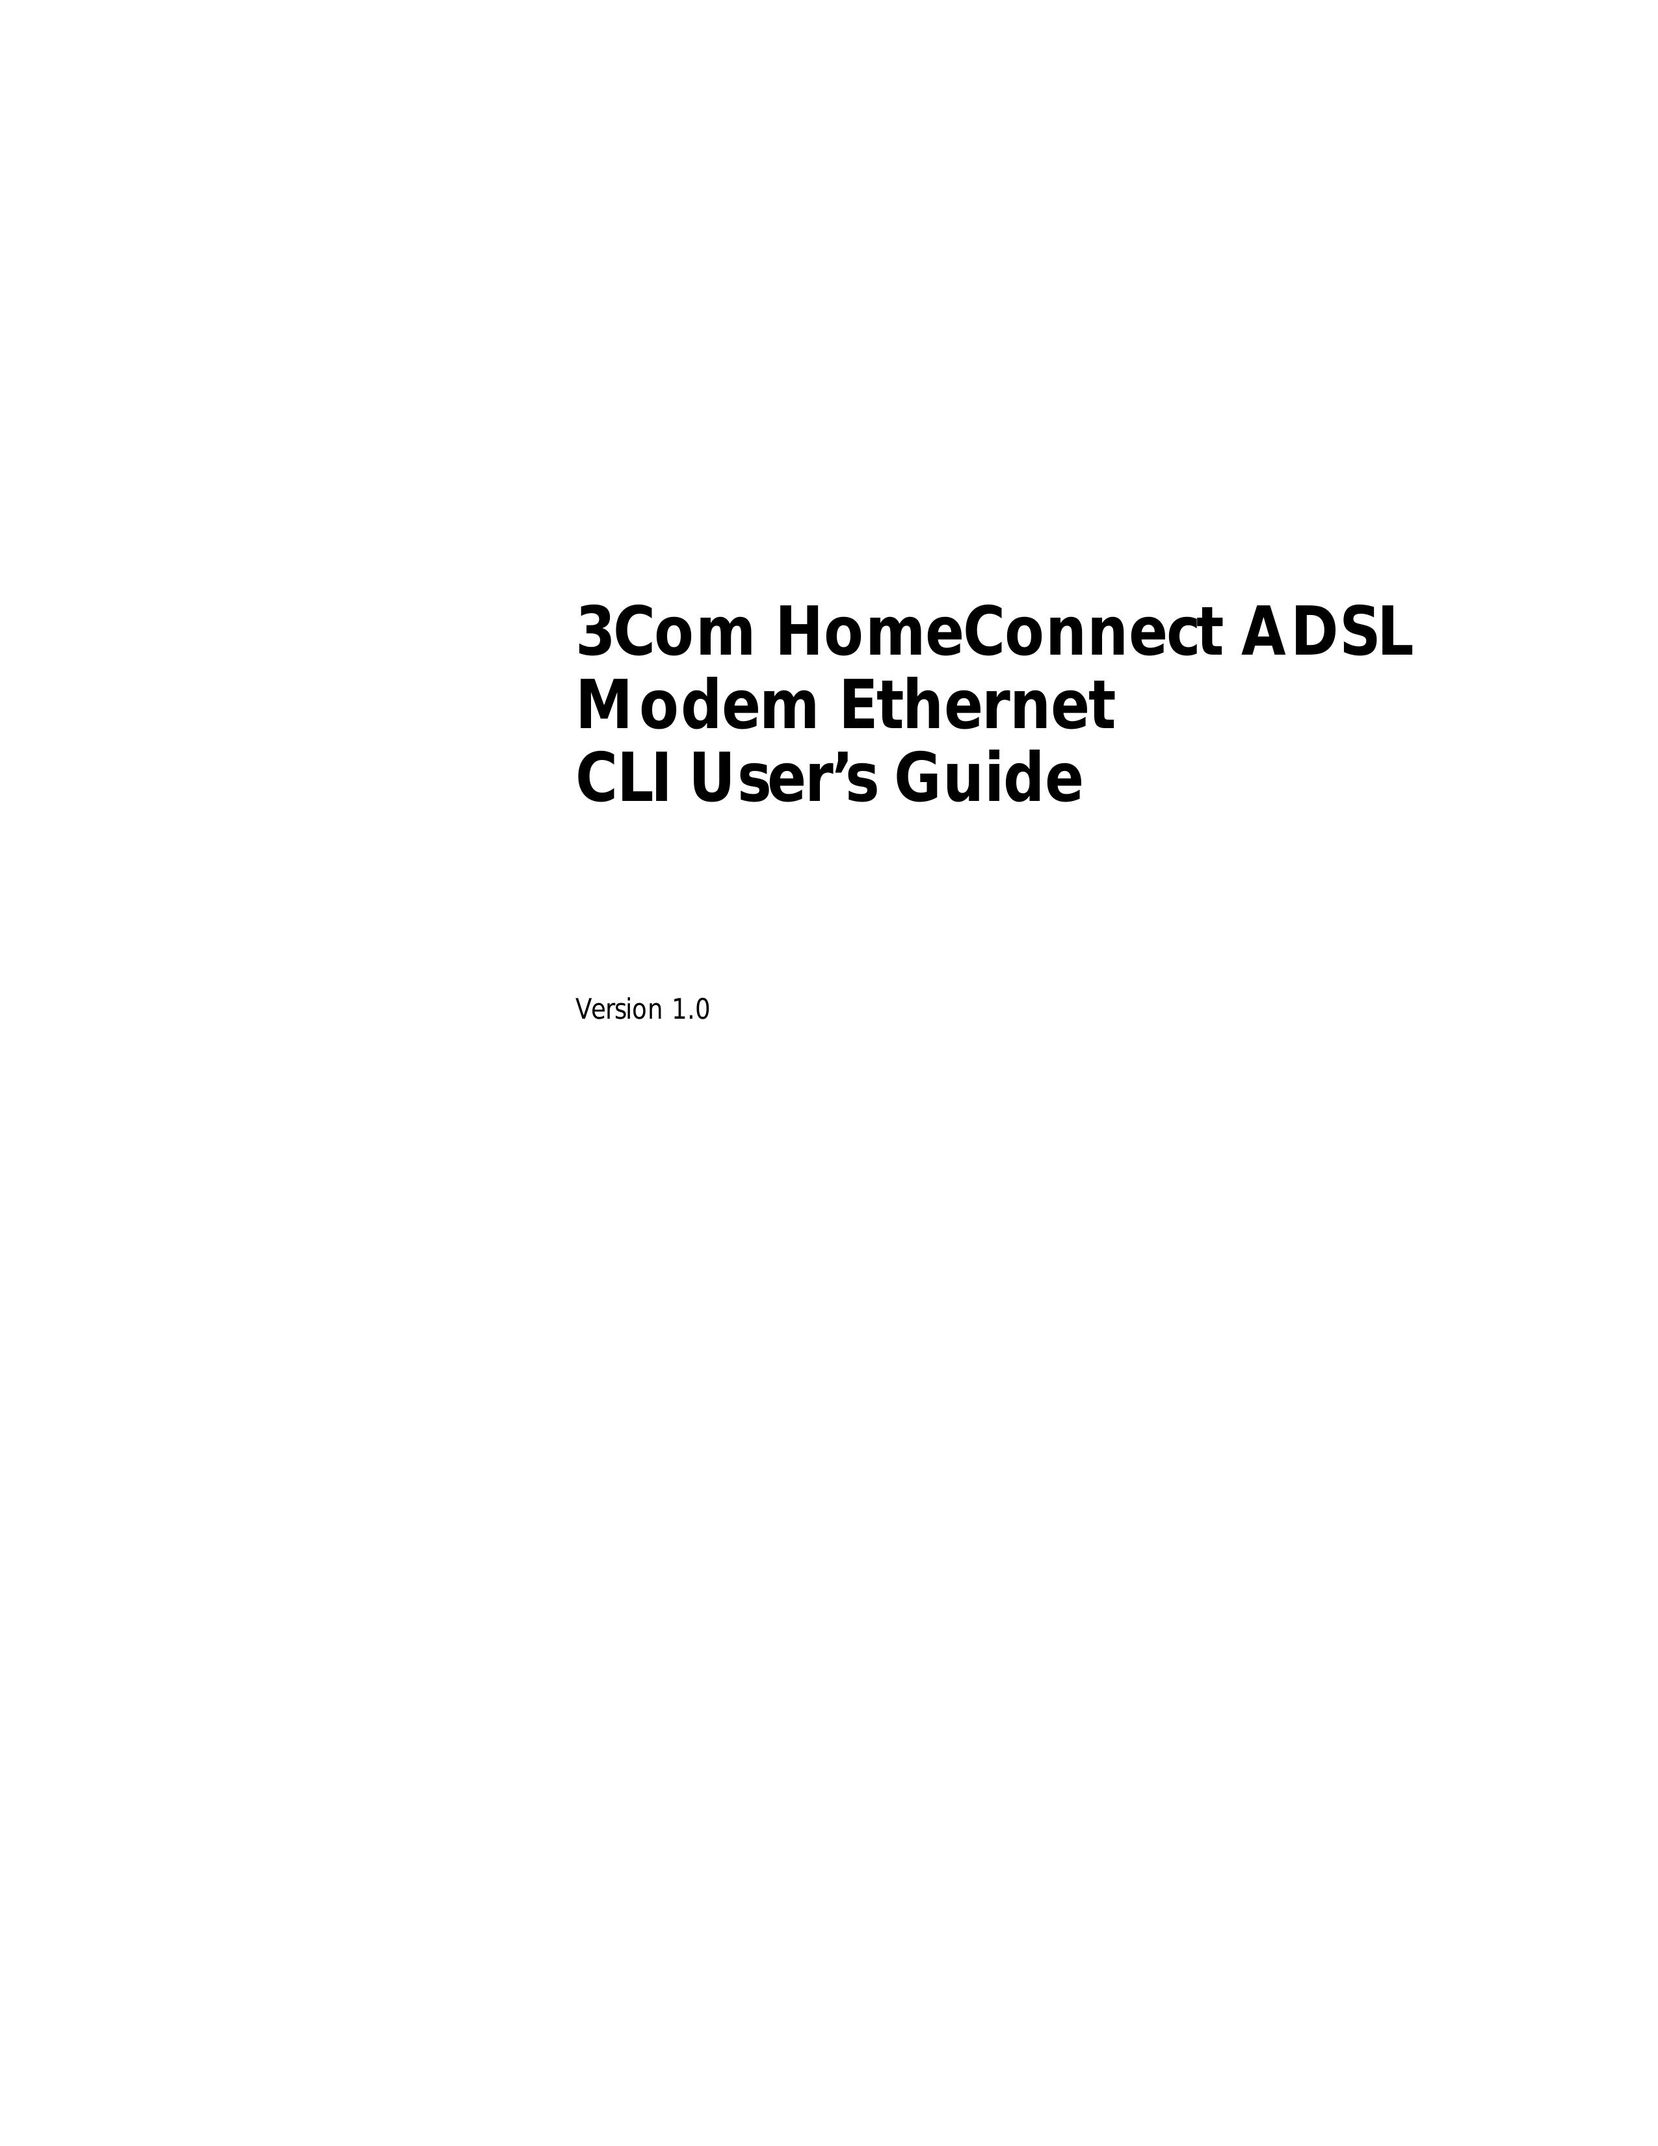 3Com ADSL Modem Ethernet Modem User Manual